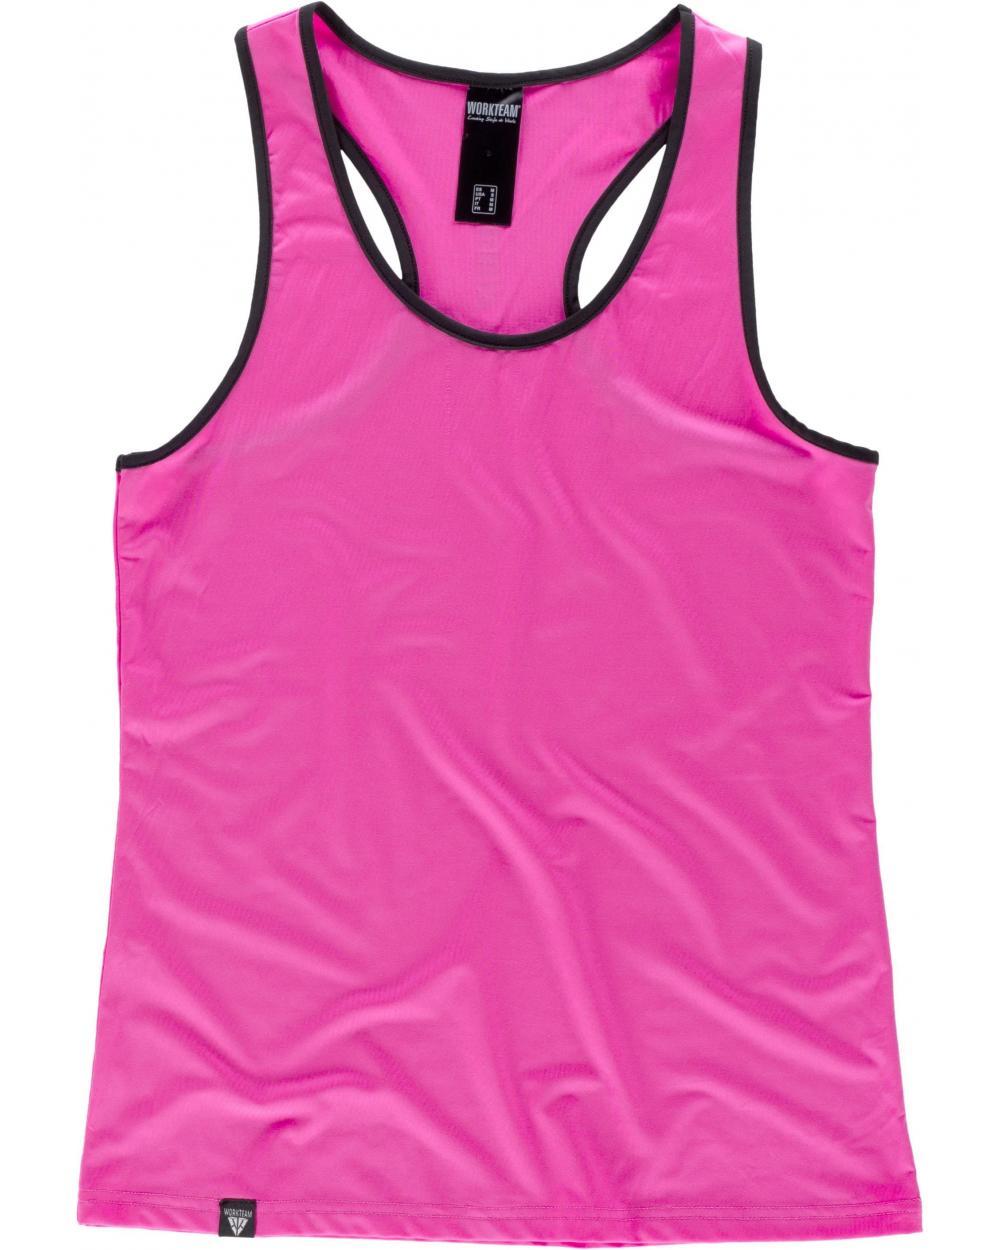 Comprar Camiseta deportiva para mujer S7520 Rosa Fluor workteam delante